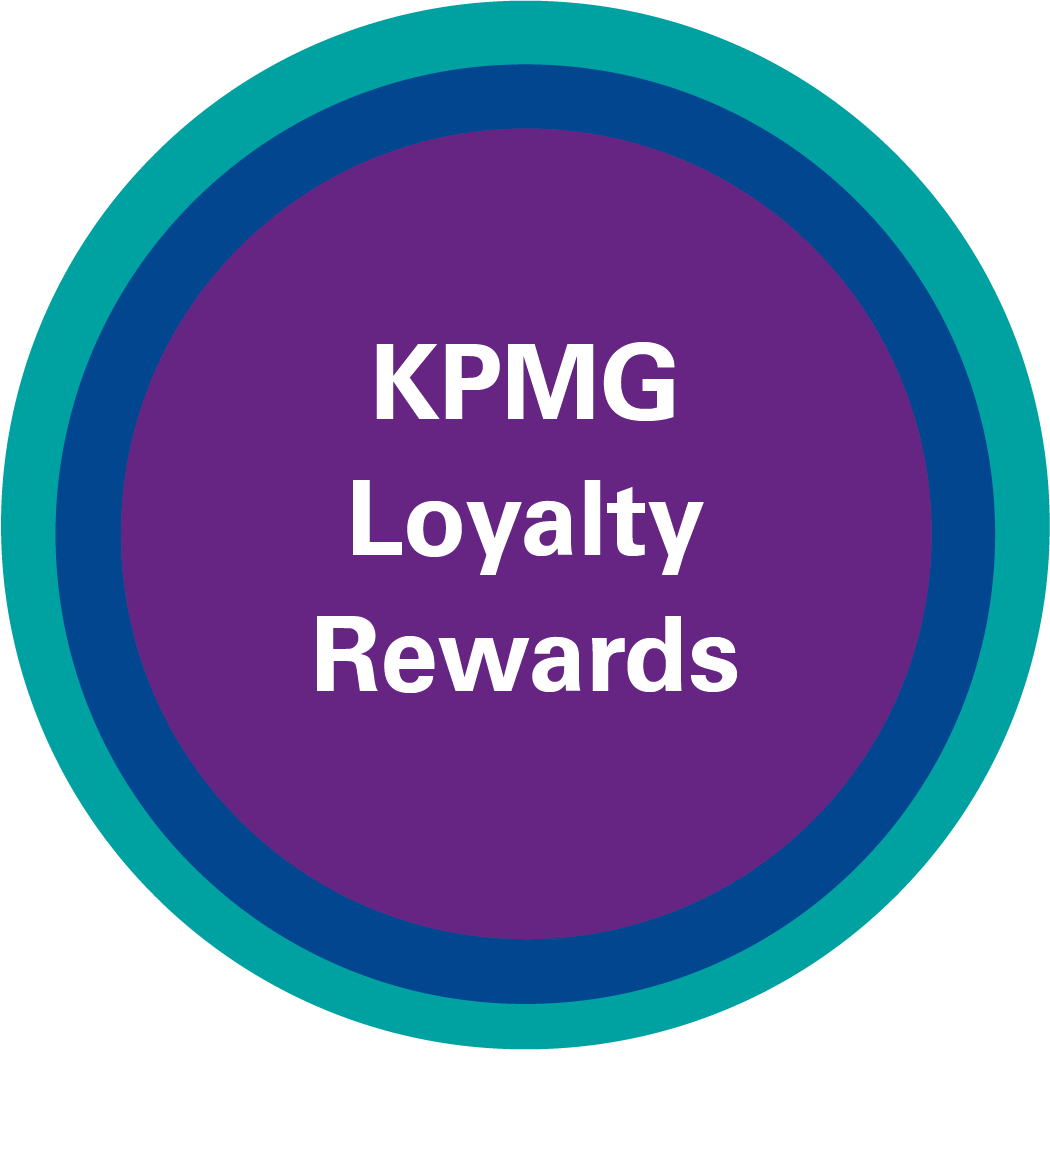 KPMG Loyalty Rewards